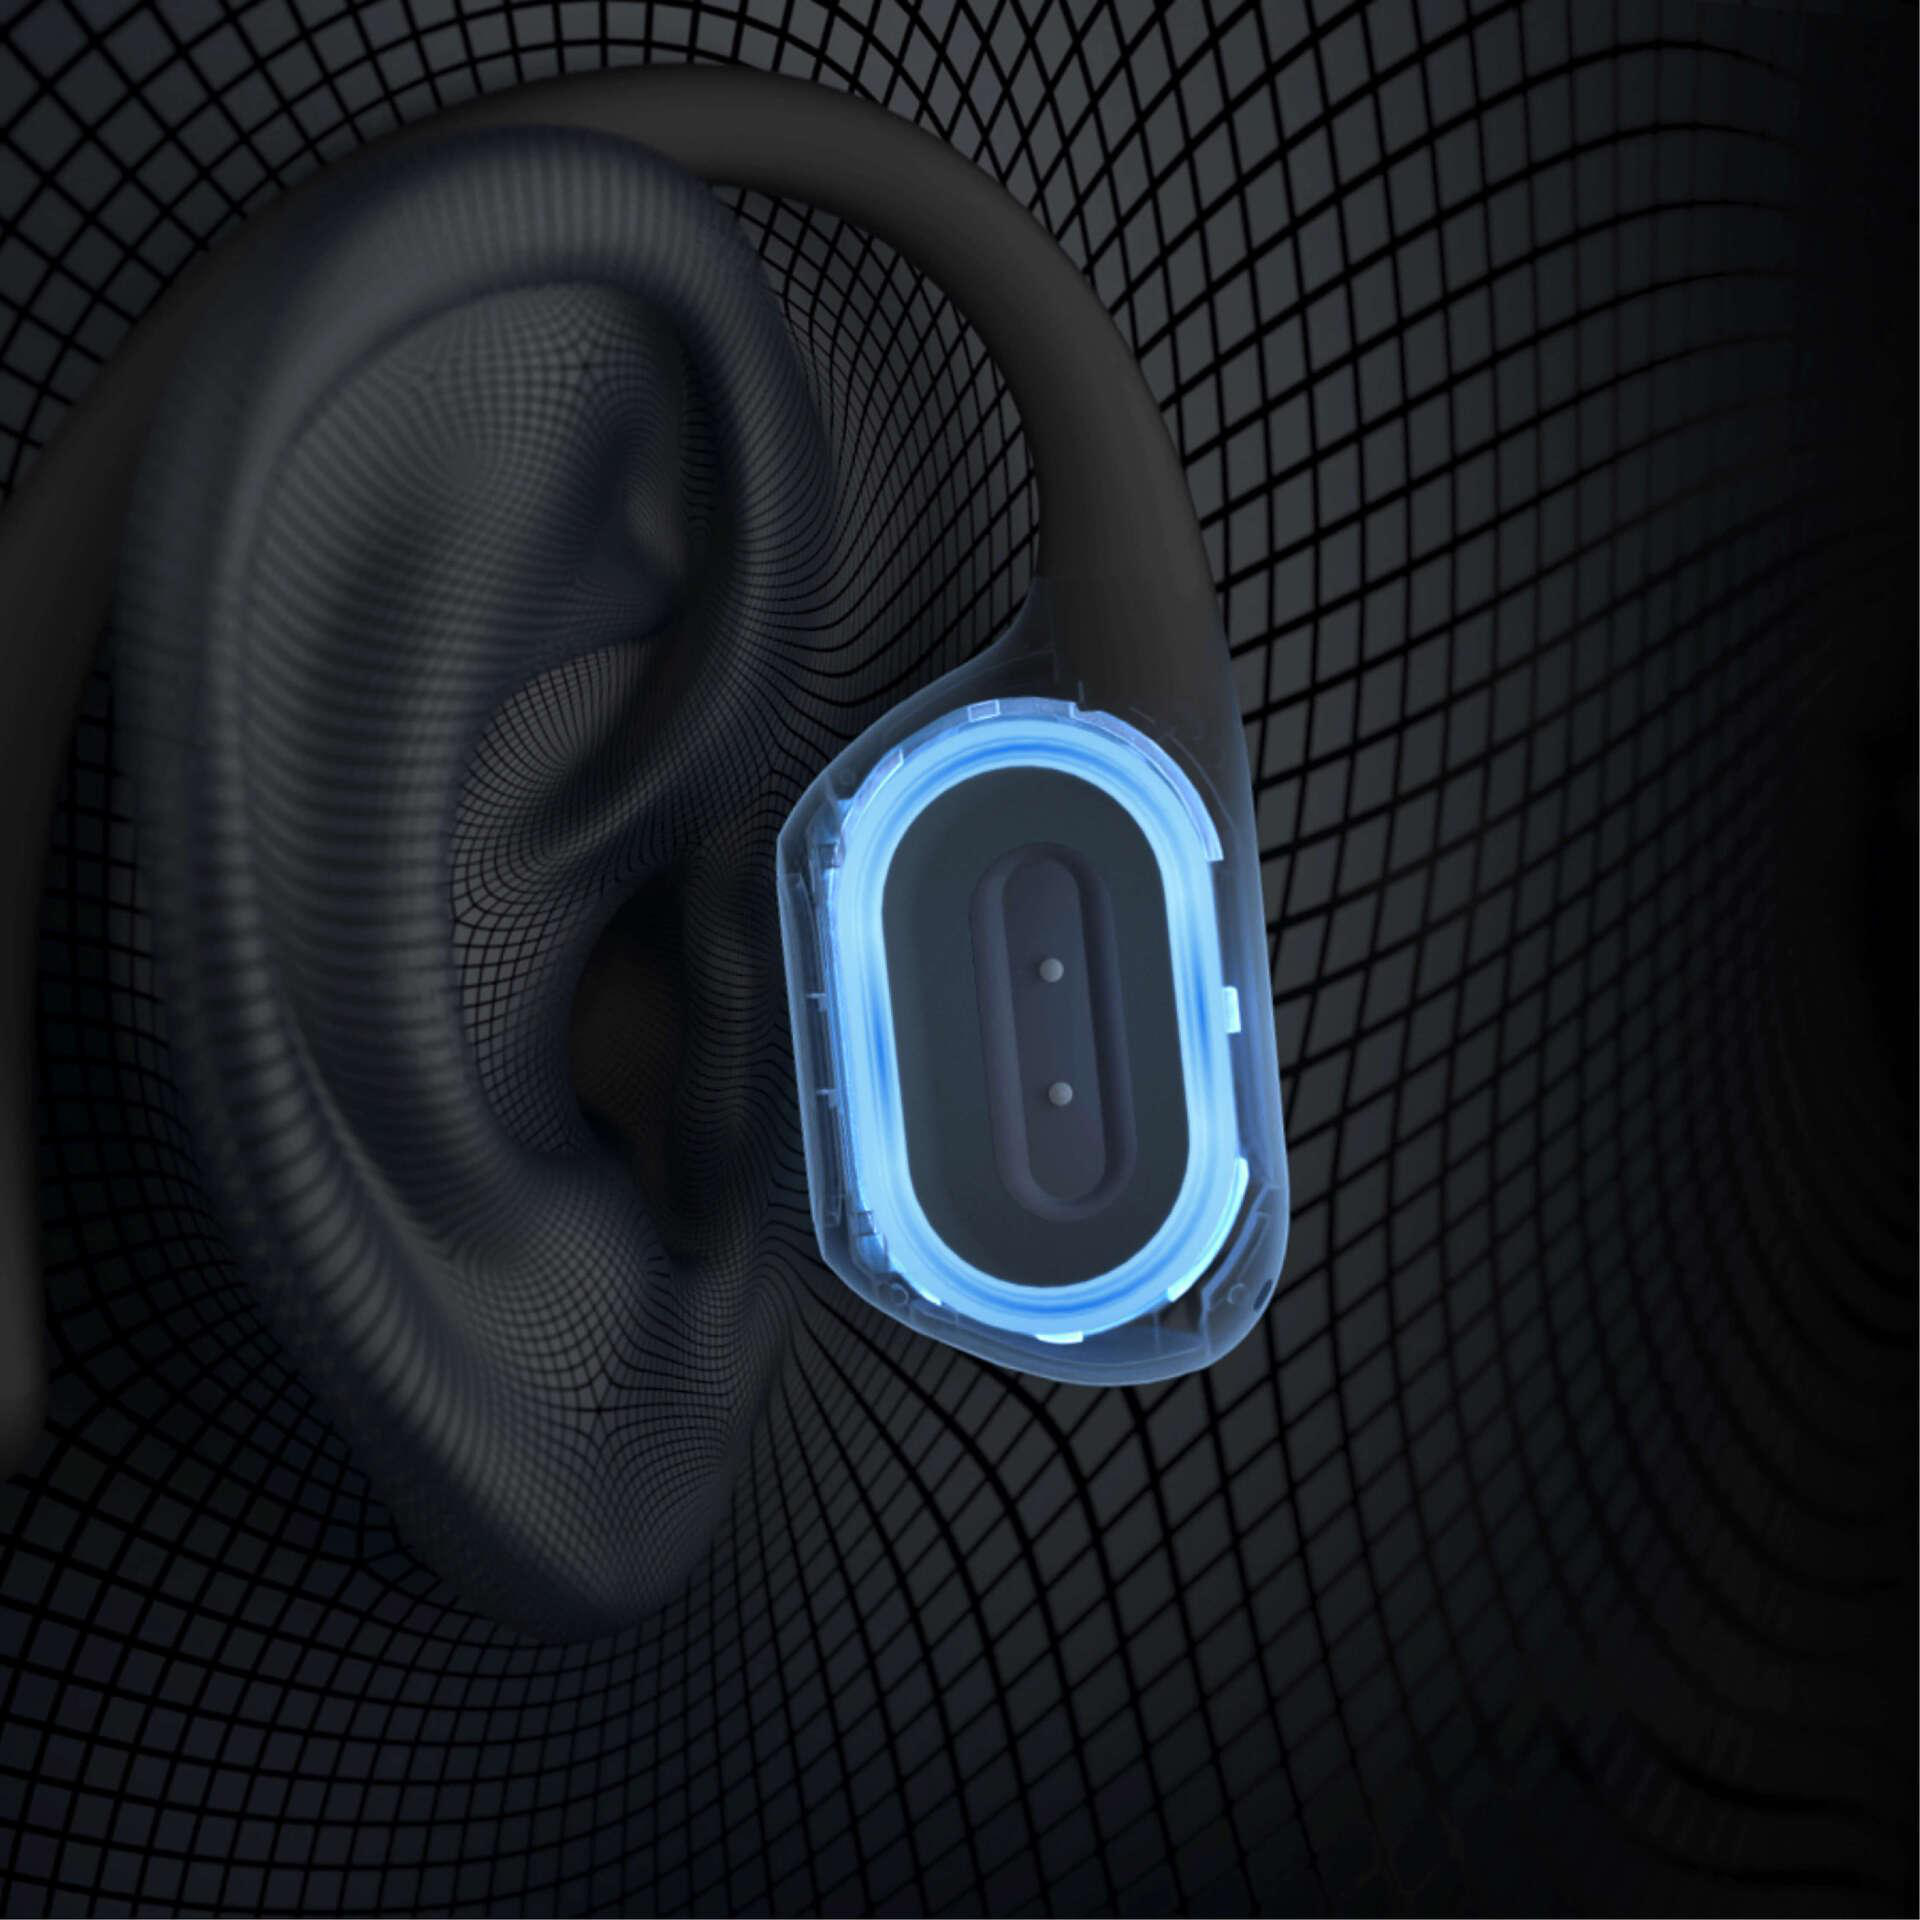 SHOKZ OpenRun Pro, Open-ear Kopfhörer Bluetooth Schwarz